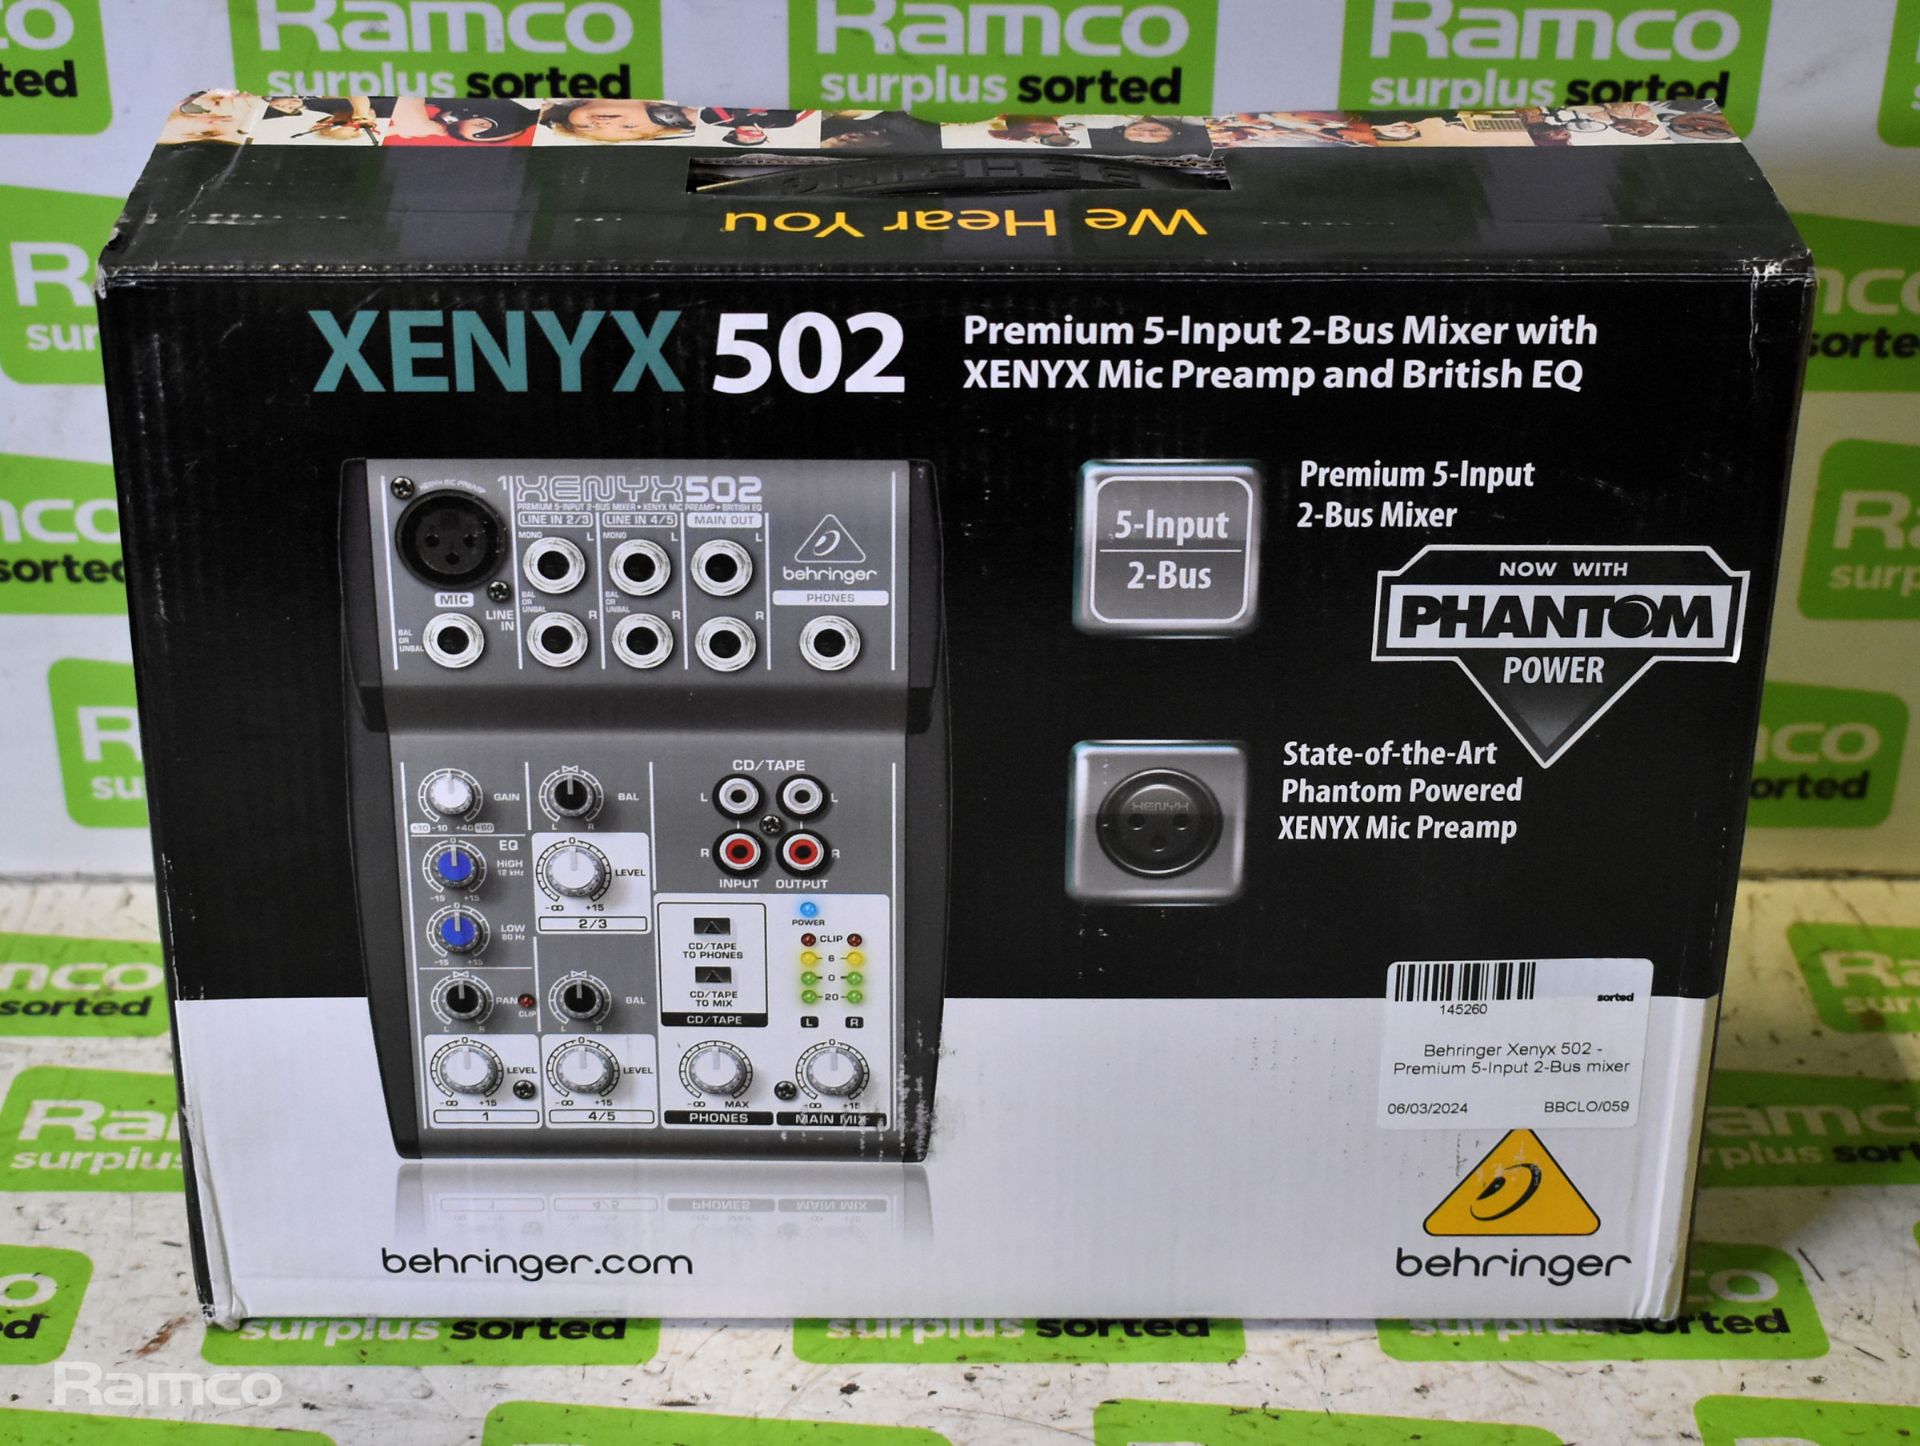 Behringer Xenyx 502 - Premium 5-Input 2-Bus mixer - Image 5 of 6